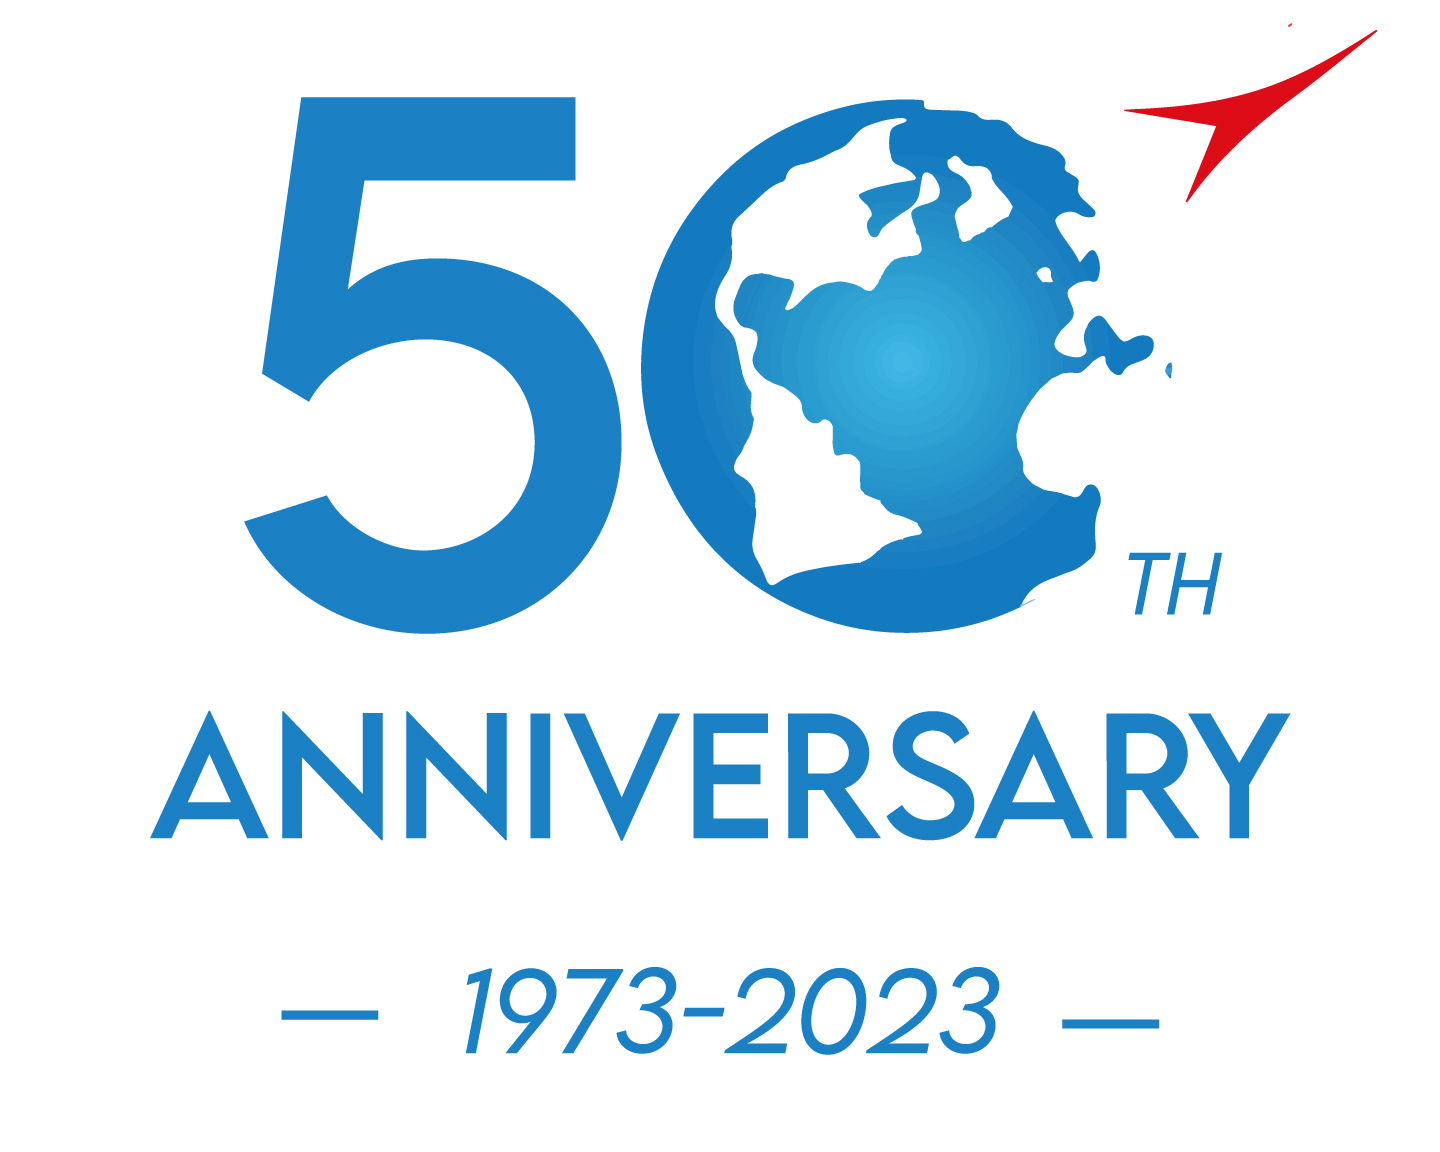 Sepro 50th anniversary - 2023